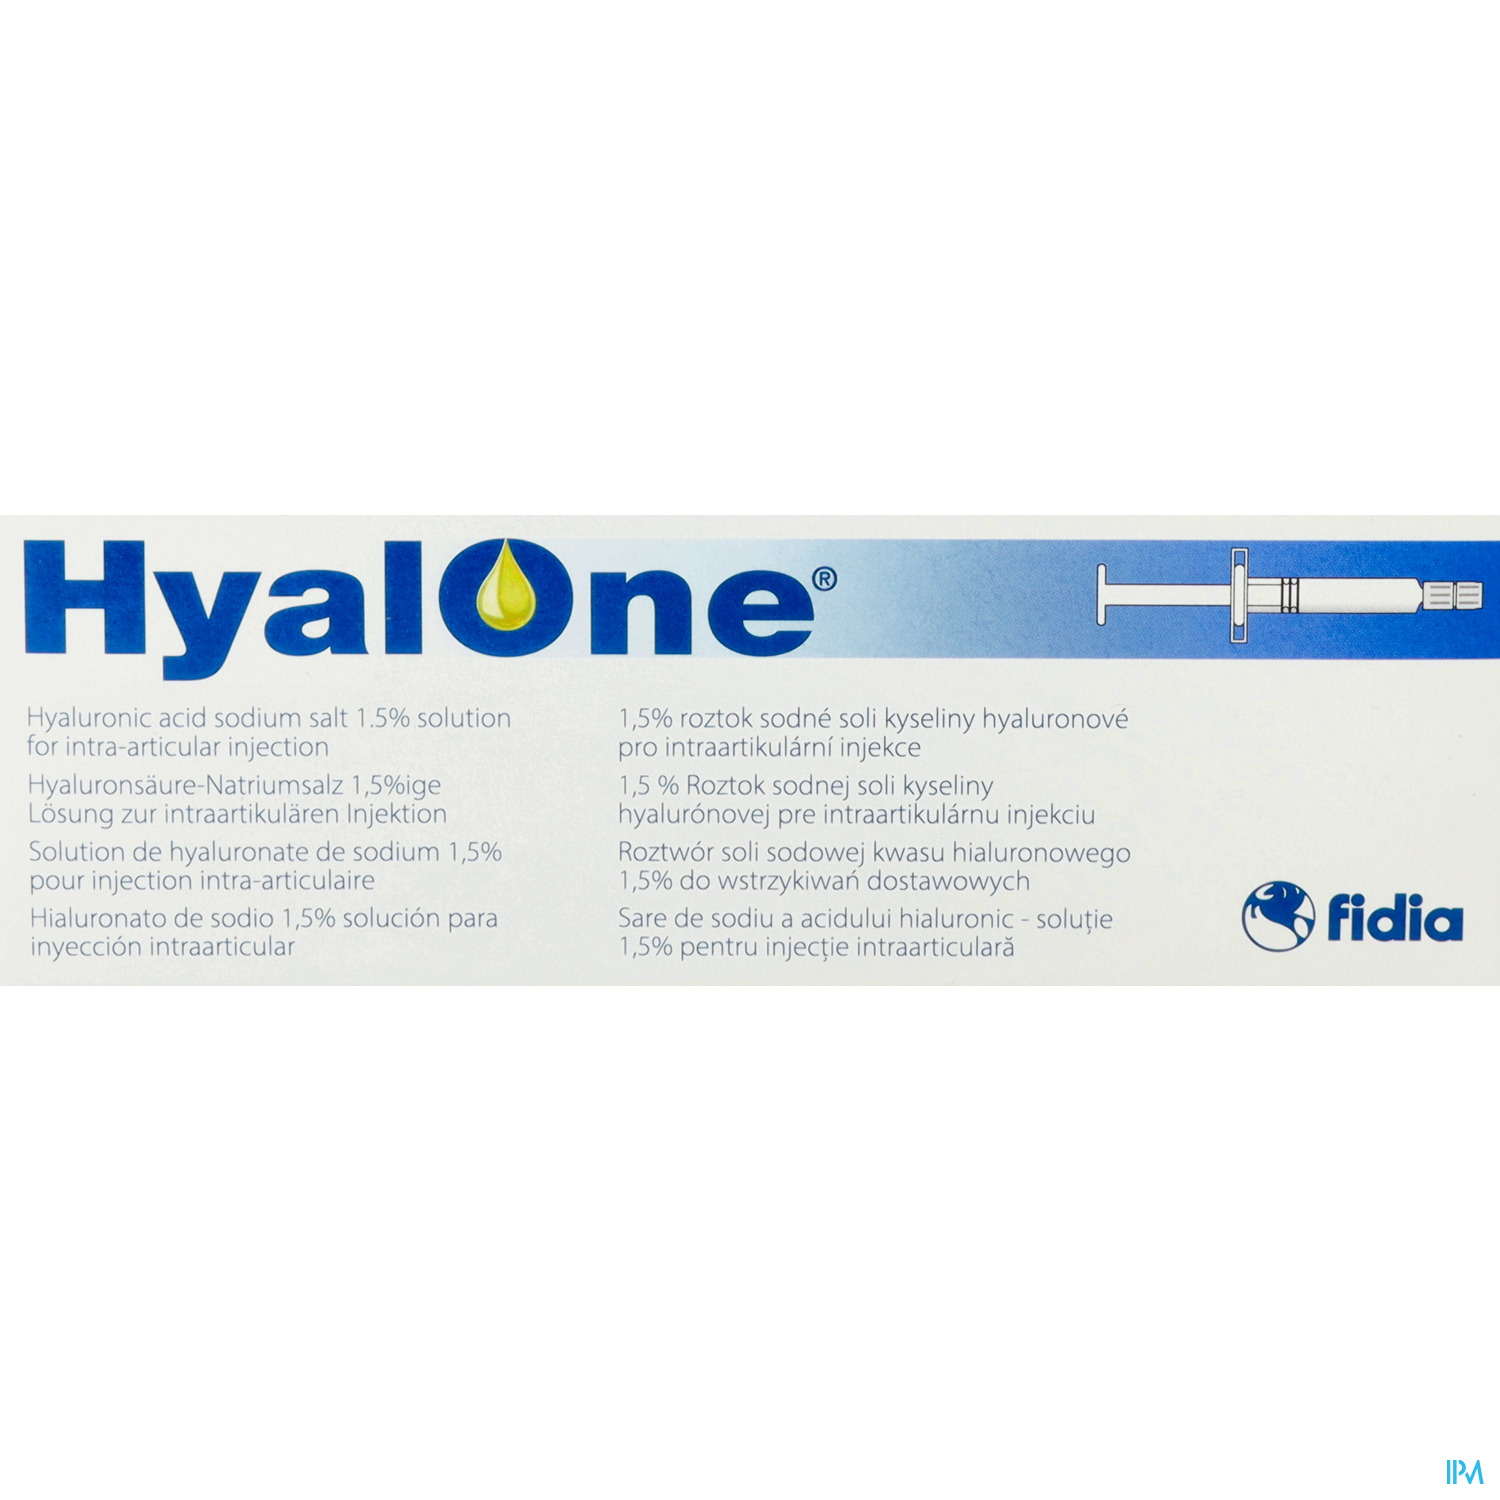 HYALONE FSPR 4ML